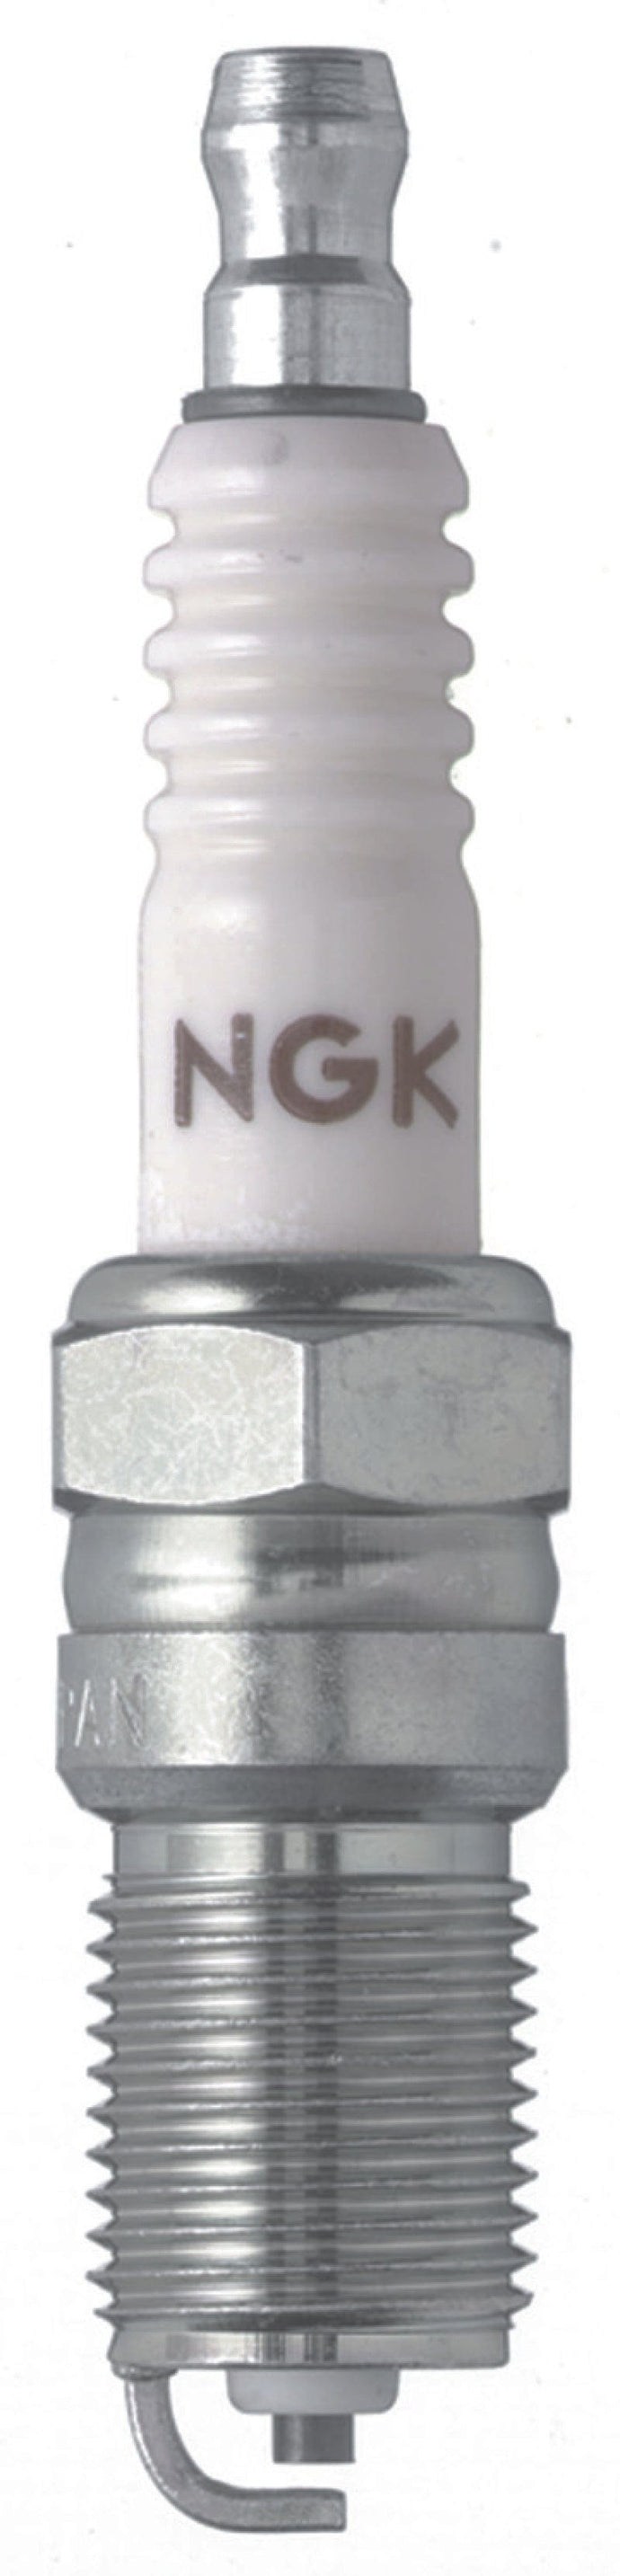 NGK NGK3526